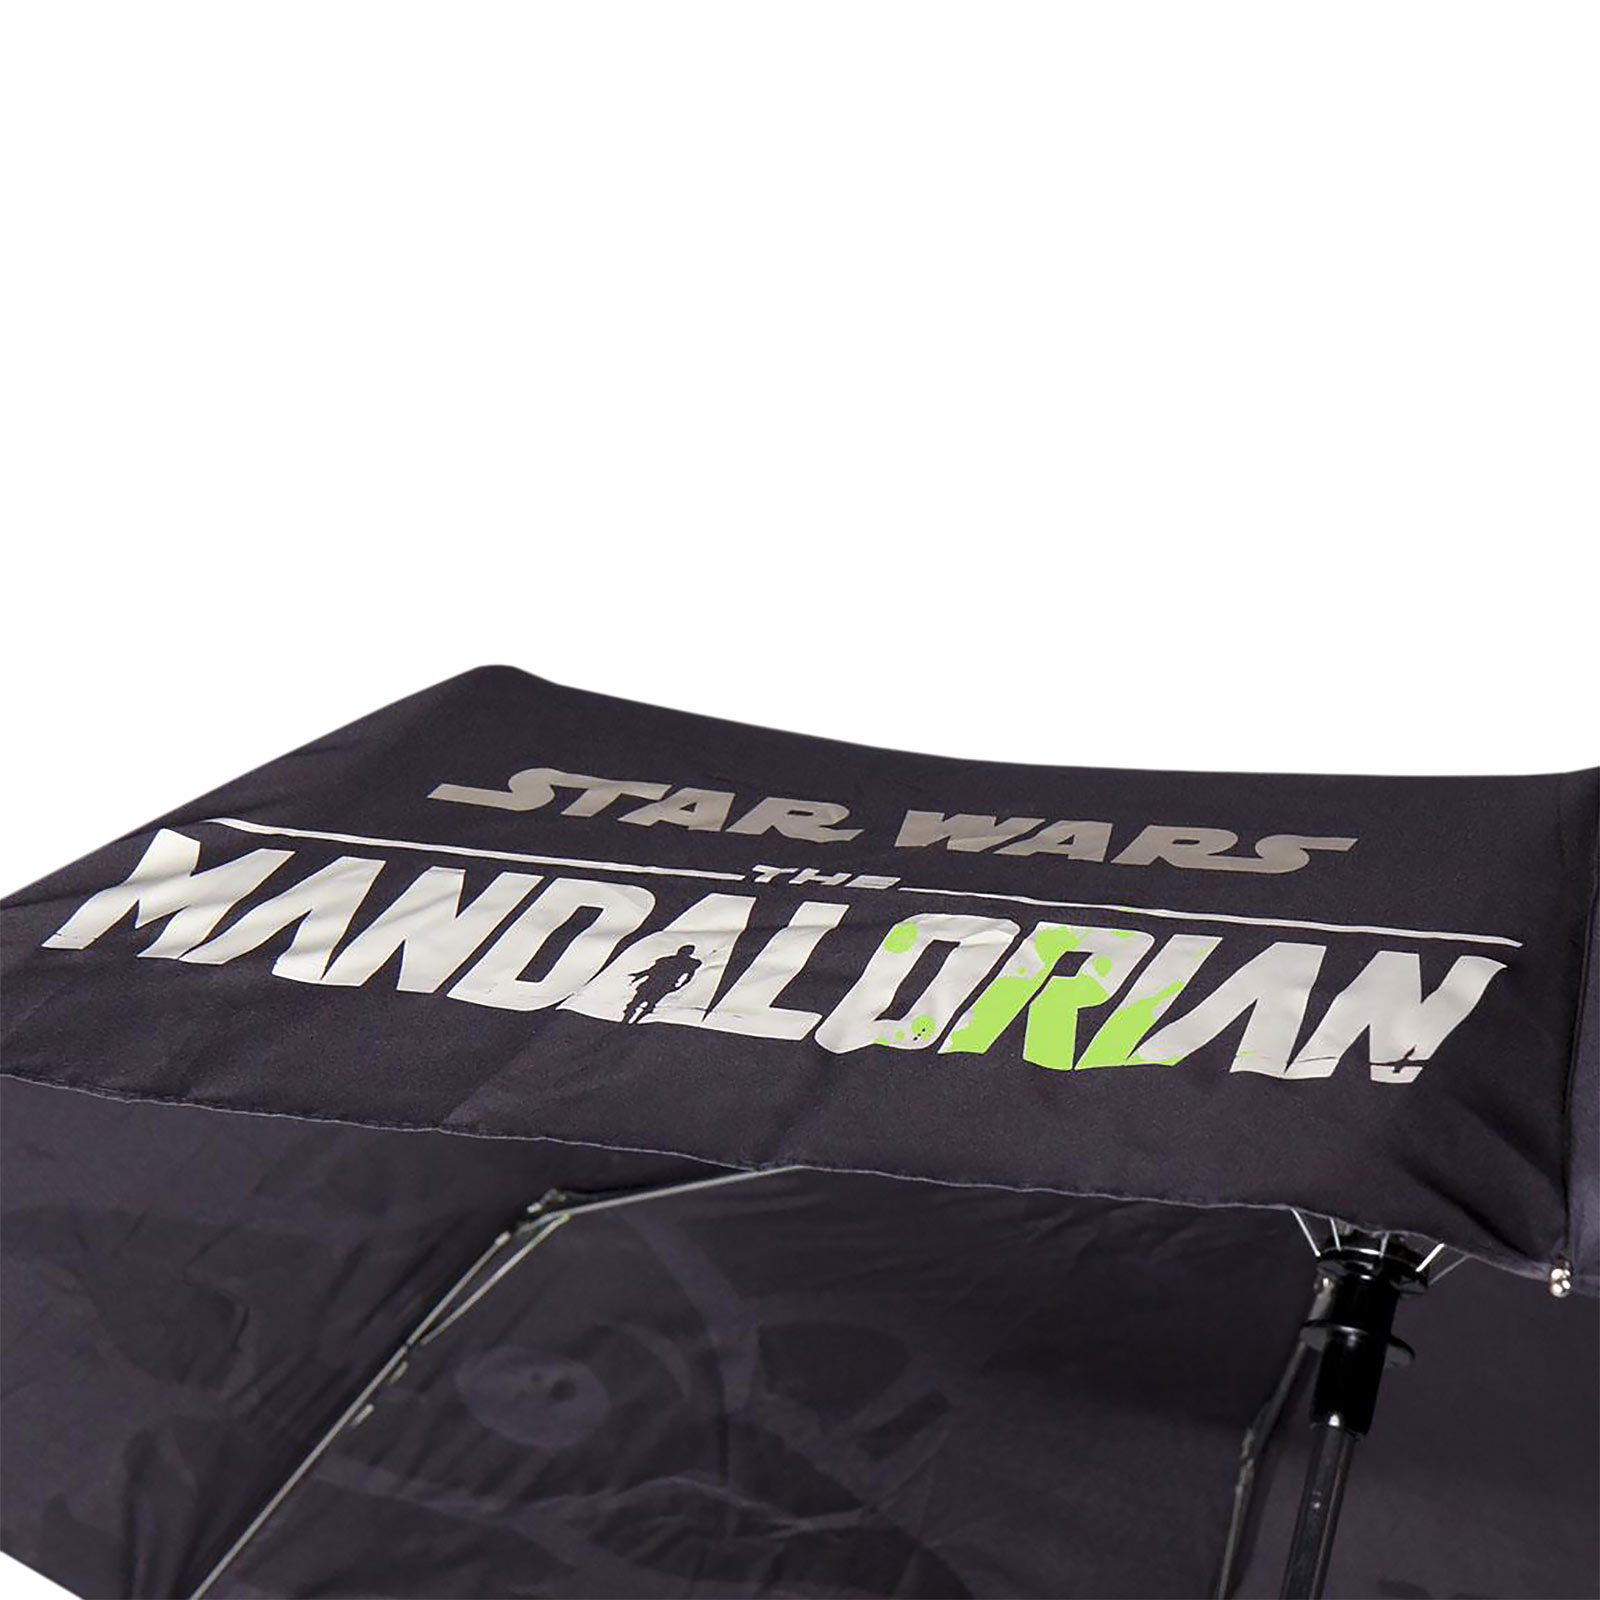 Grogu Umbrella with Aqua Effect - Star Wars The Mandalorian